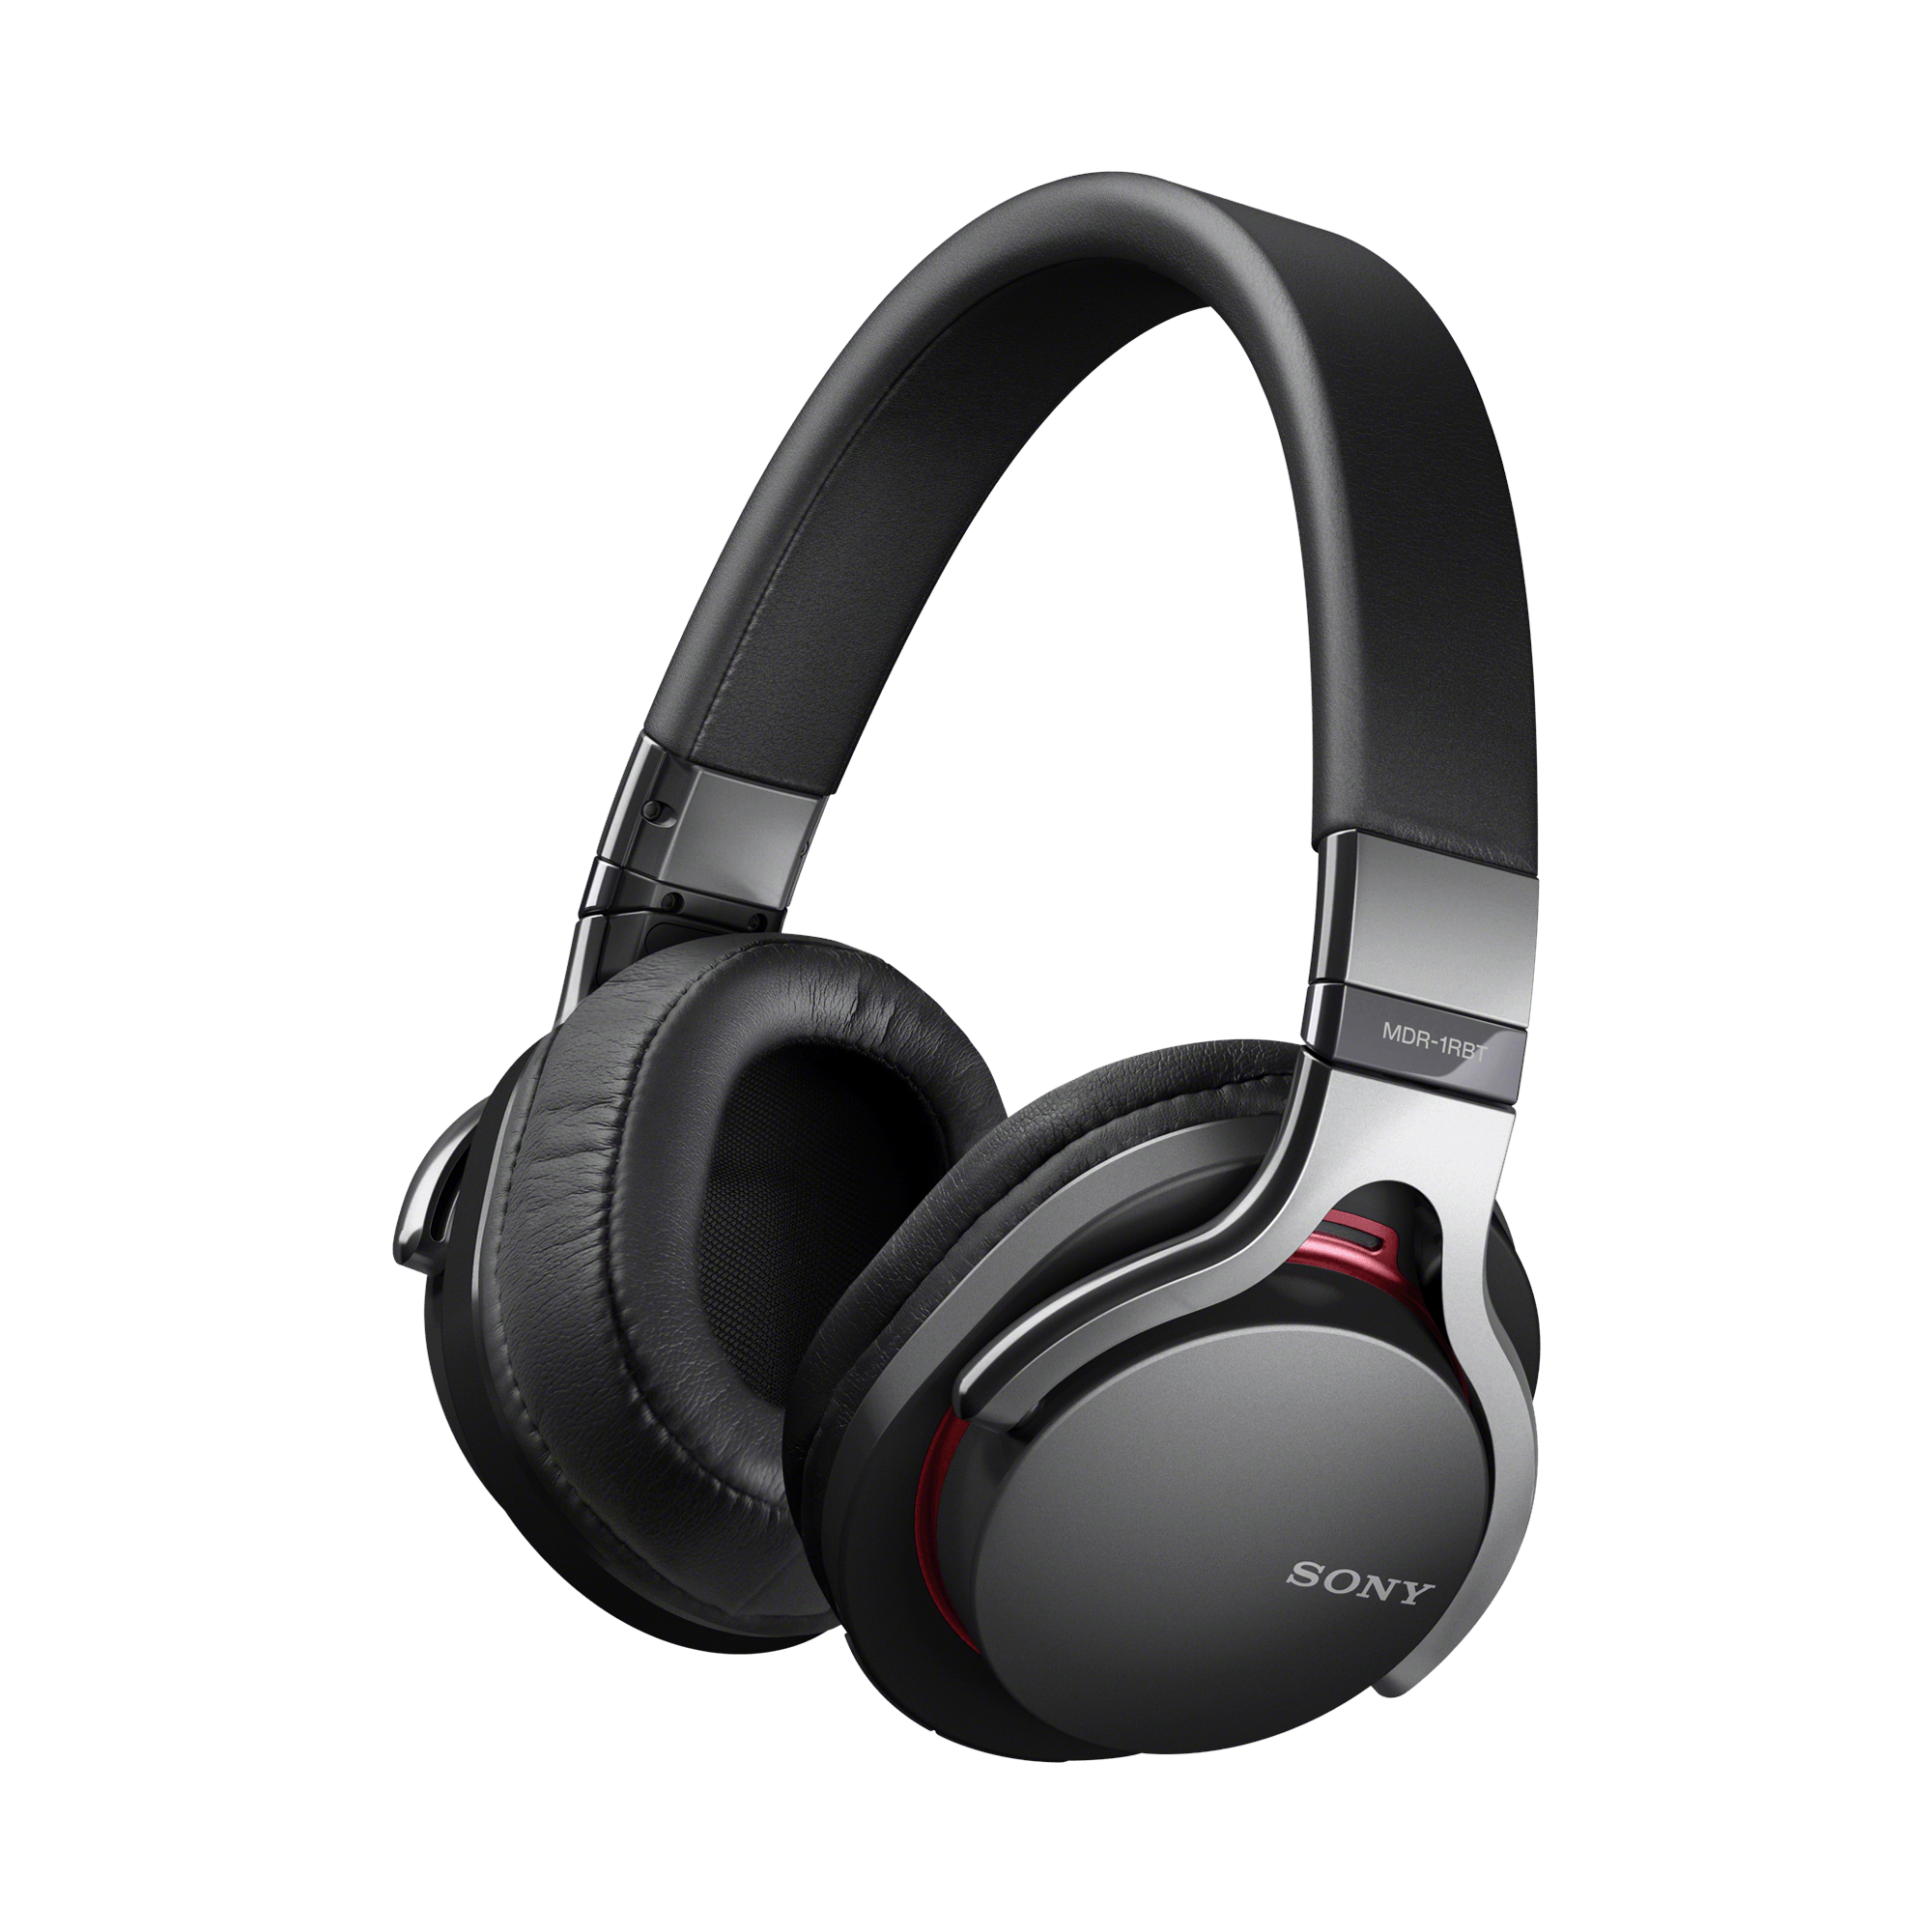 Black Headphones PNG HD Quality